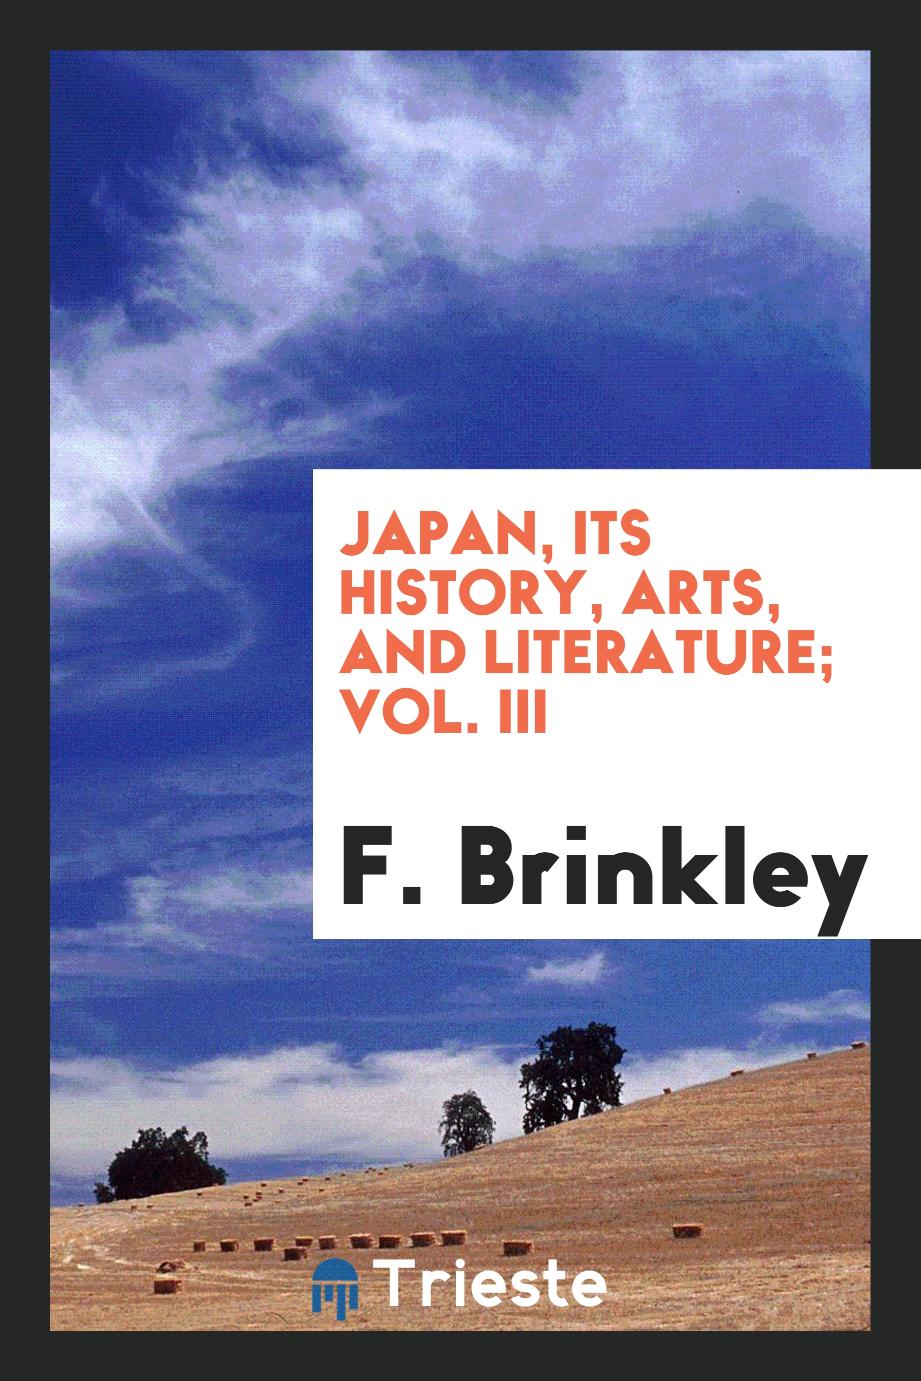 Japan, its history, arts, and literature; Vol. III